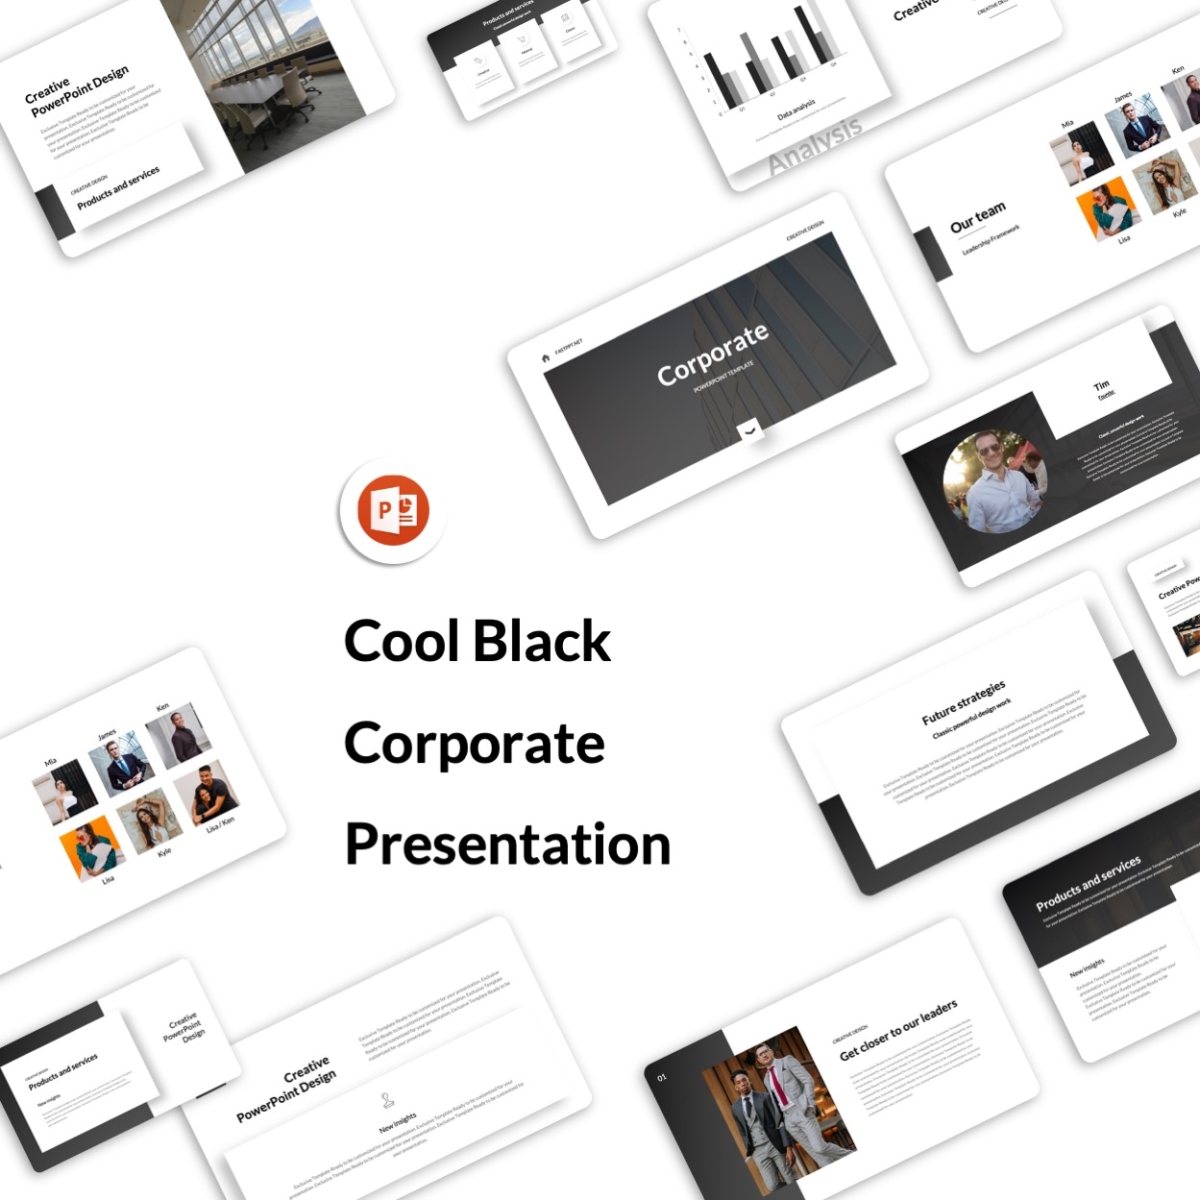 Cool Black Corporate Presentation Design